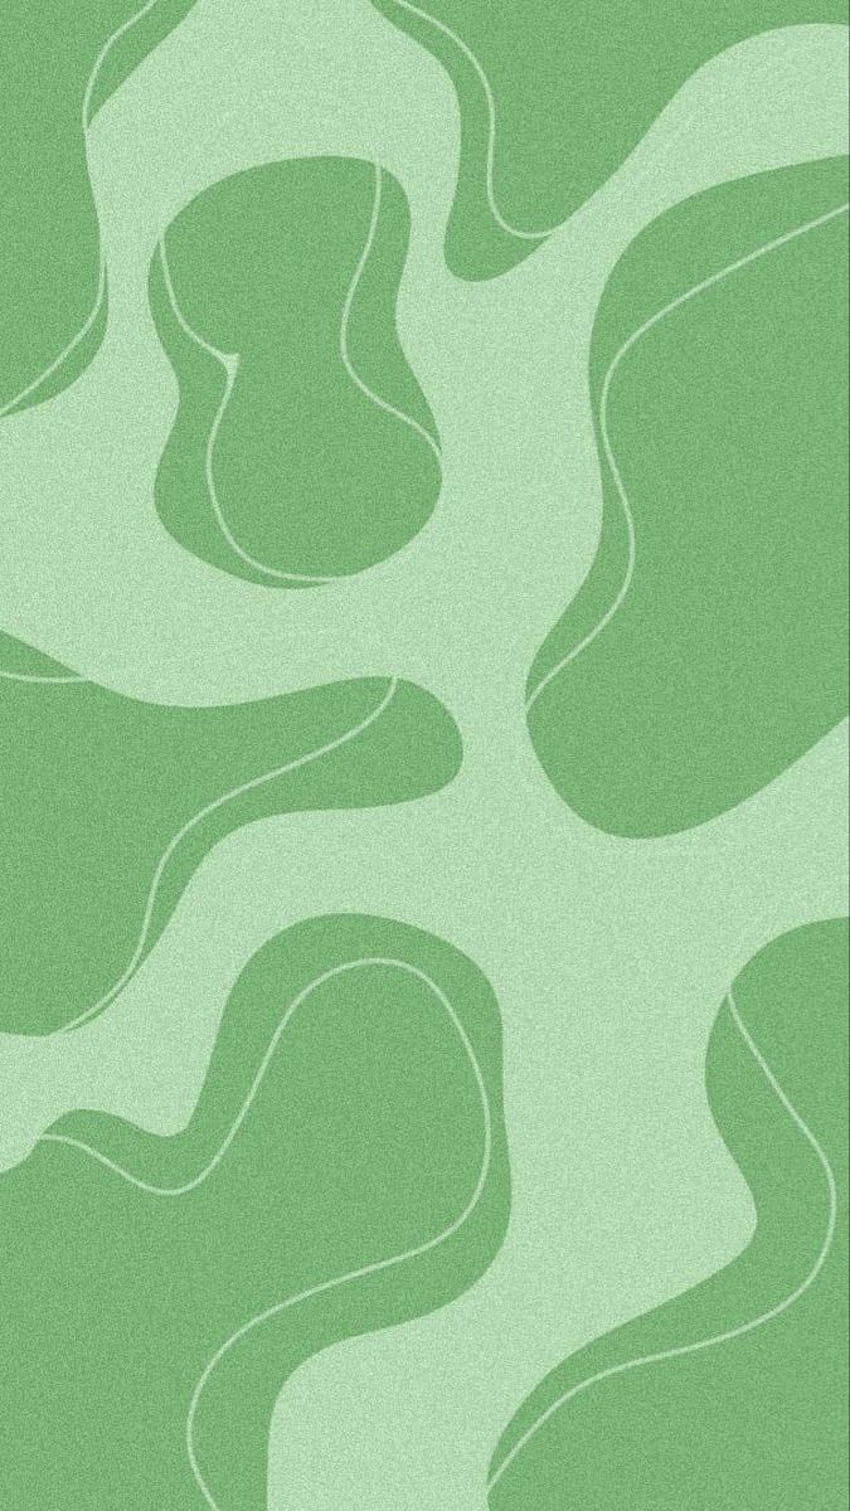 in 2021, green vintage aesthetic HD phone wallpaper